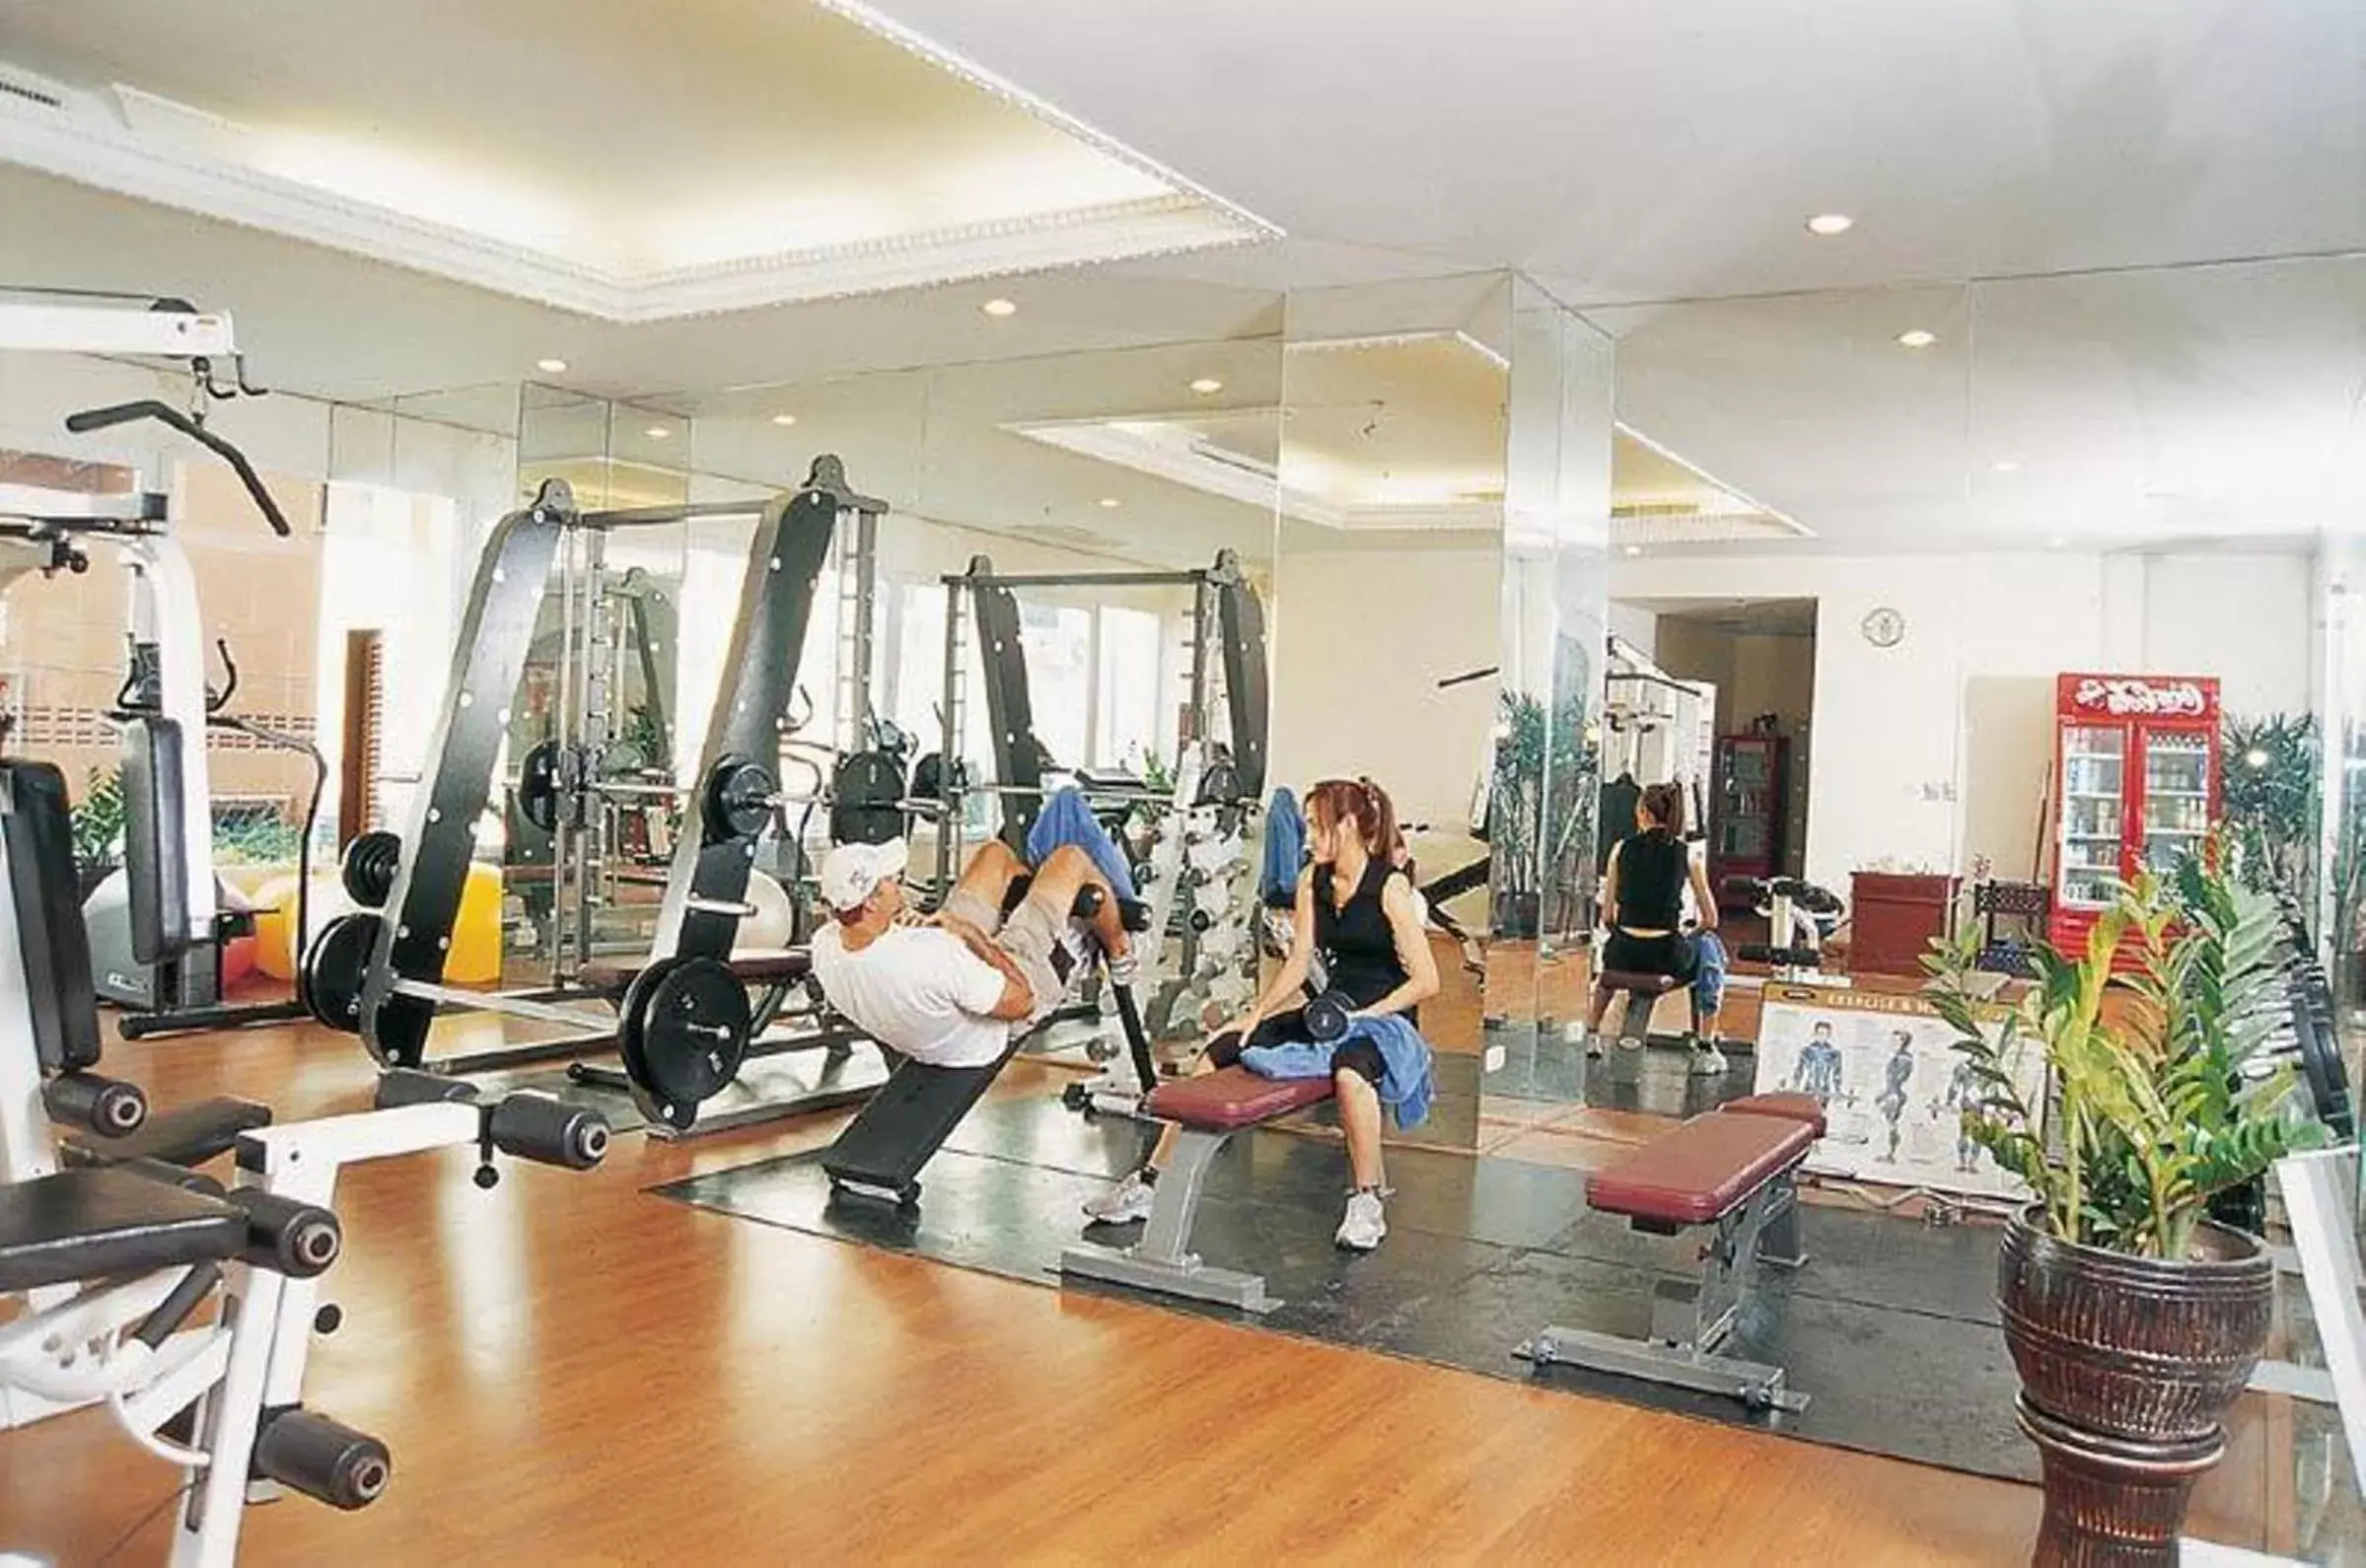 Fitness centre/facilities, Fitness Center/Facilities in LK Metropole